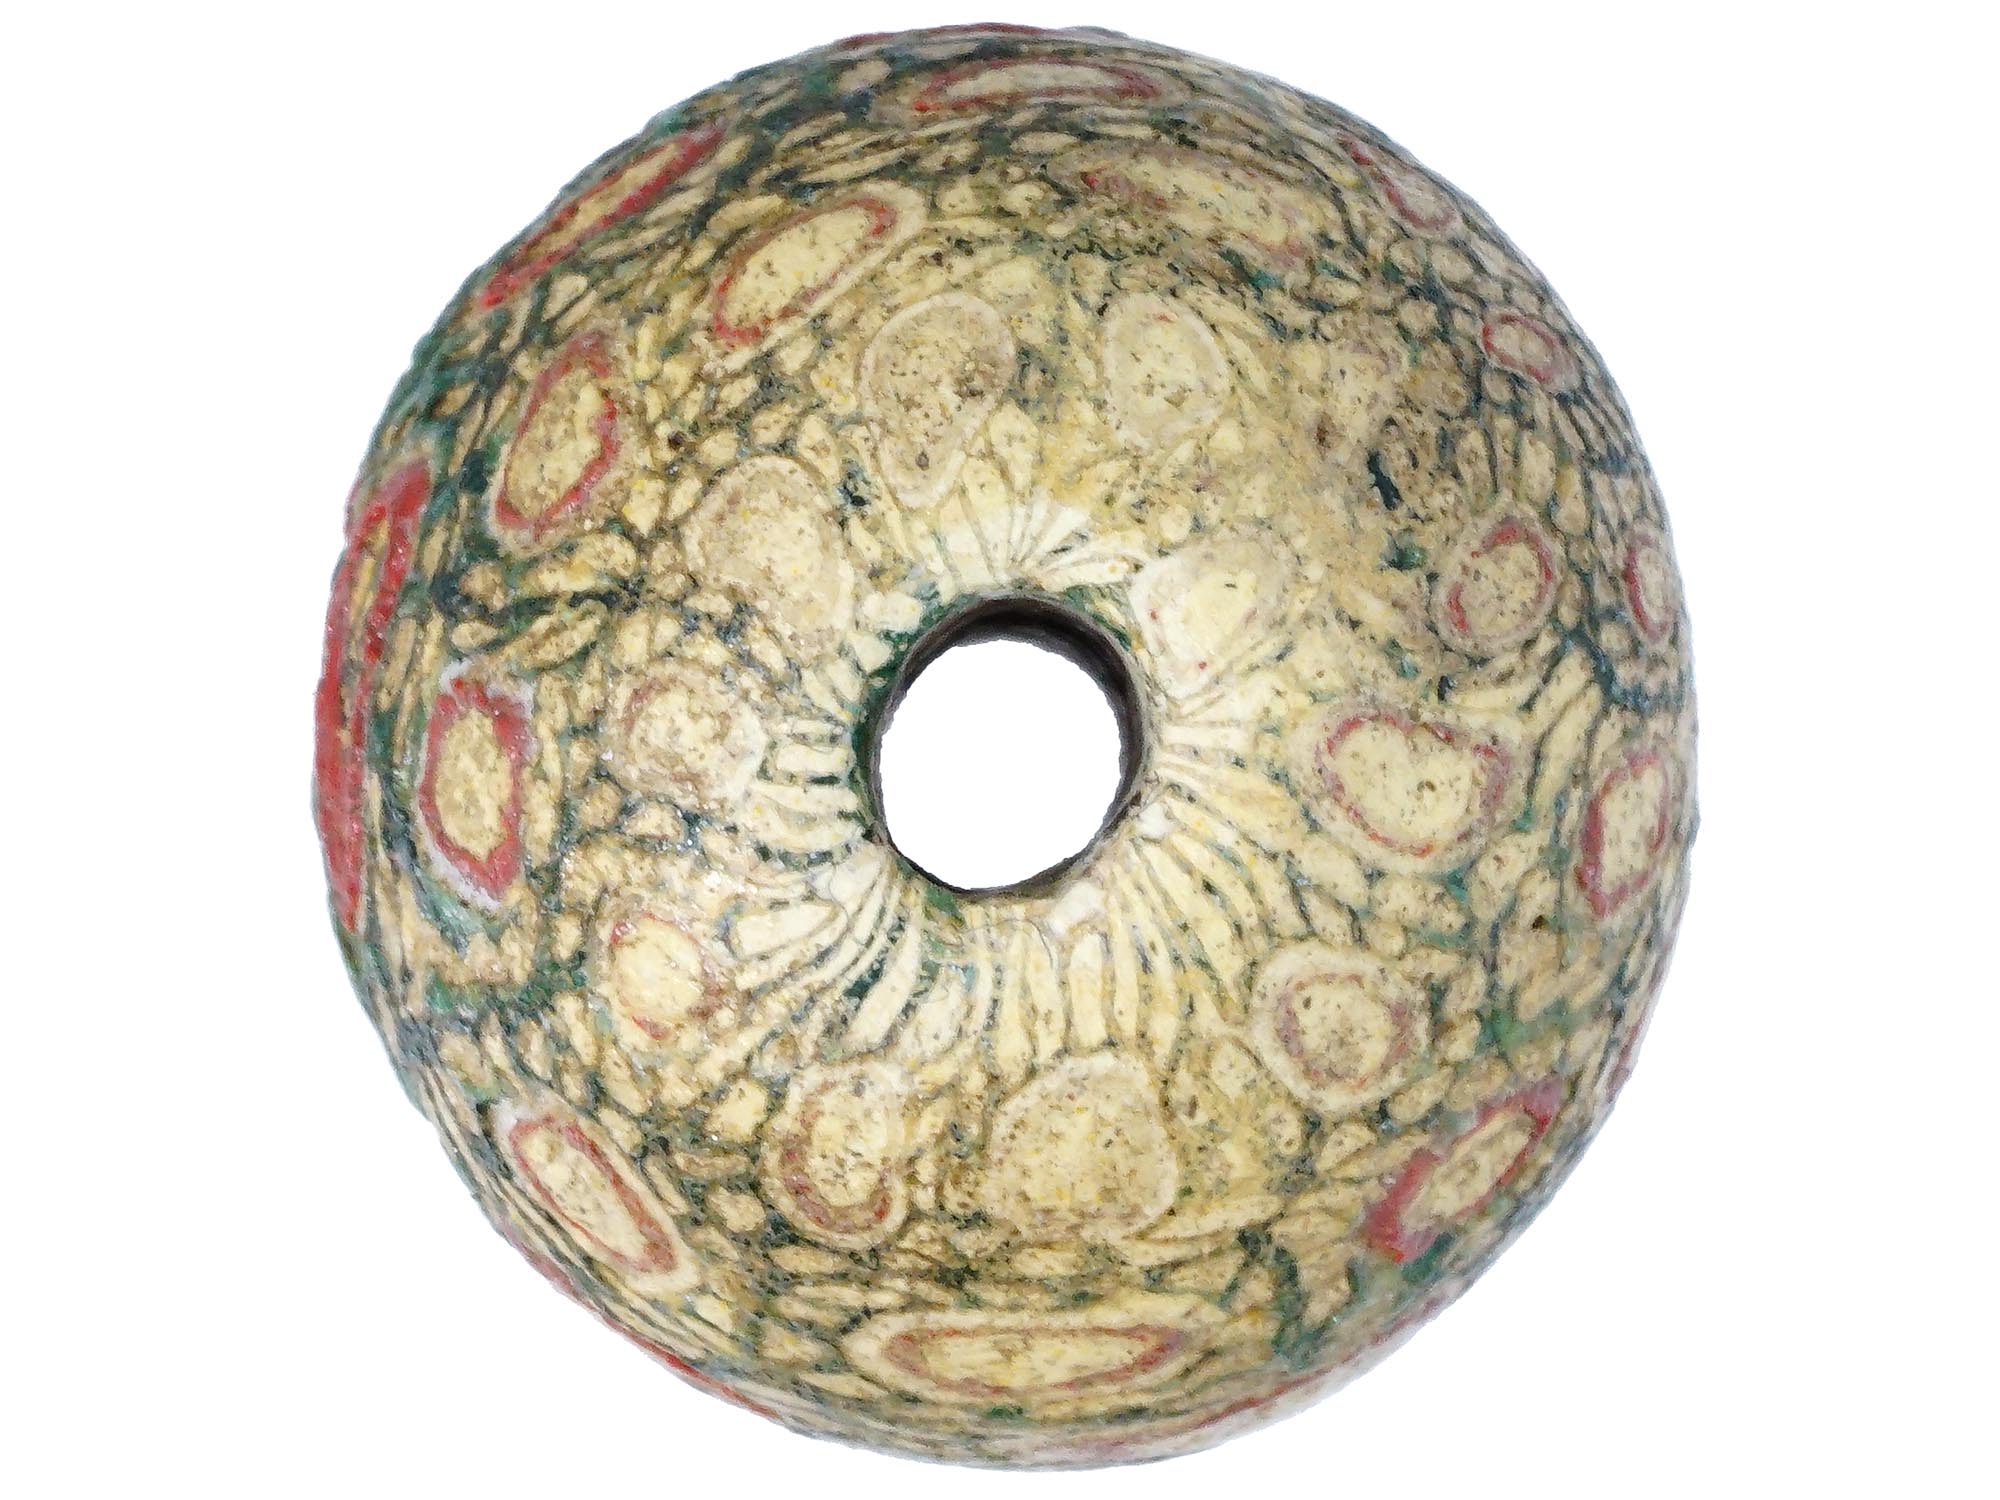 LARGE ANCIENT ROMAN MILLEFIORI GLASS BALL SHAPED BEAD PIC-4